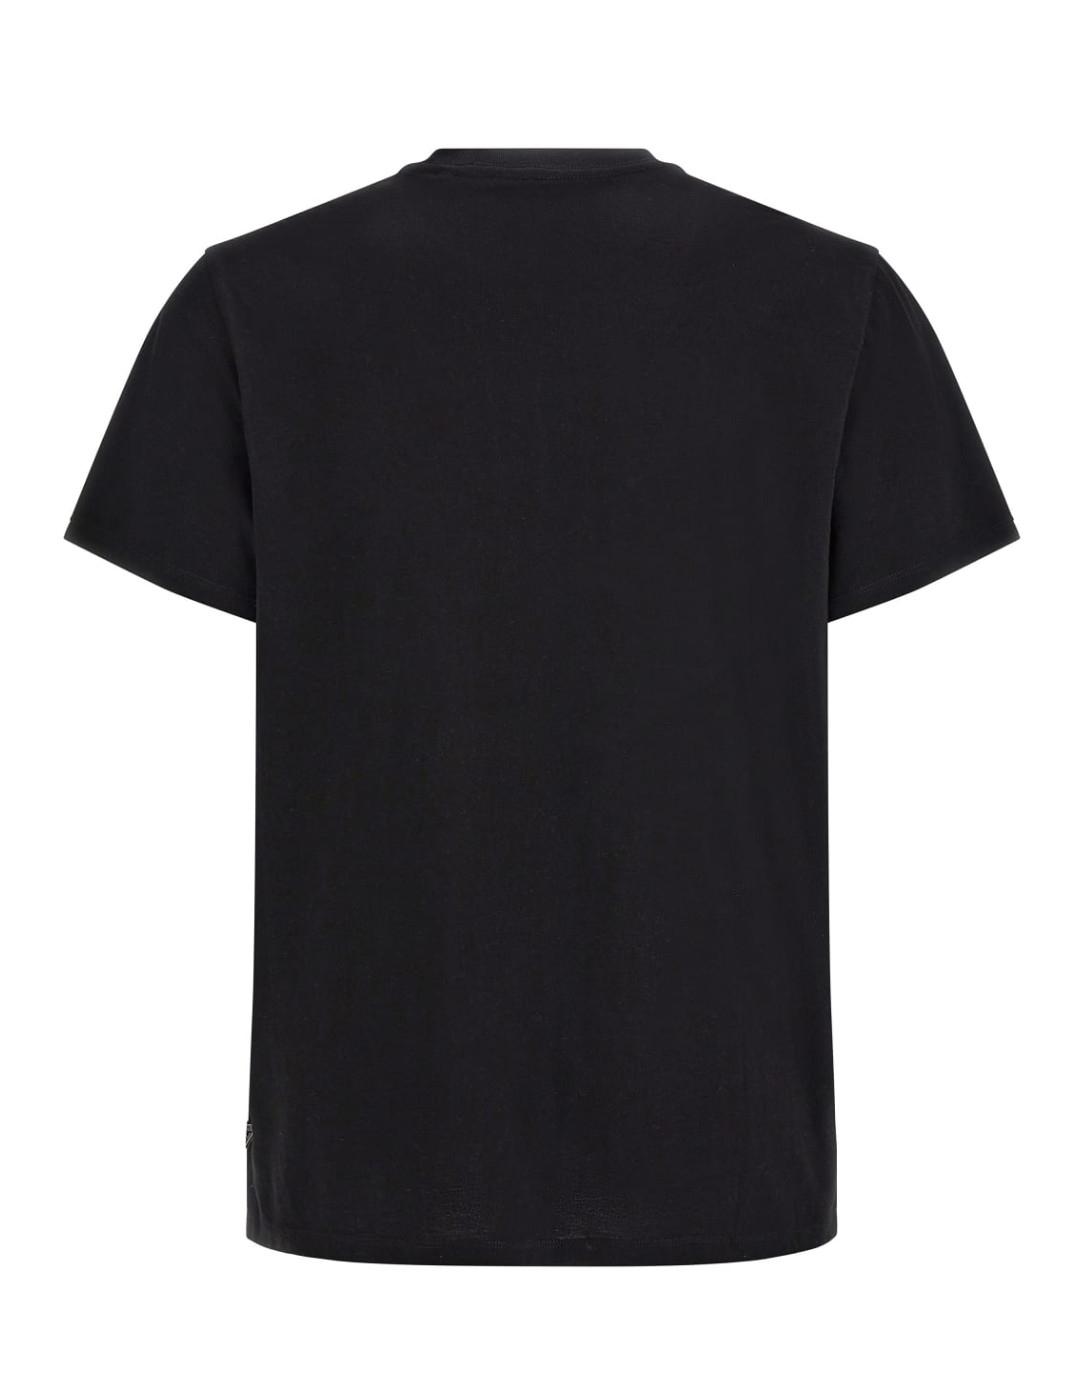 Camiseta Guess Reflective negra manga corta para hombre